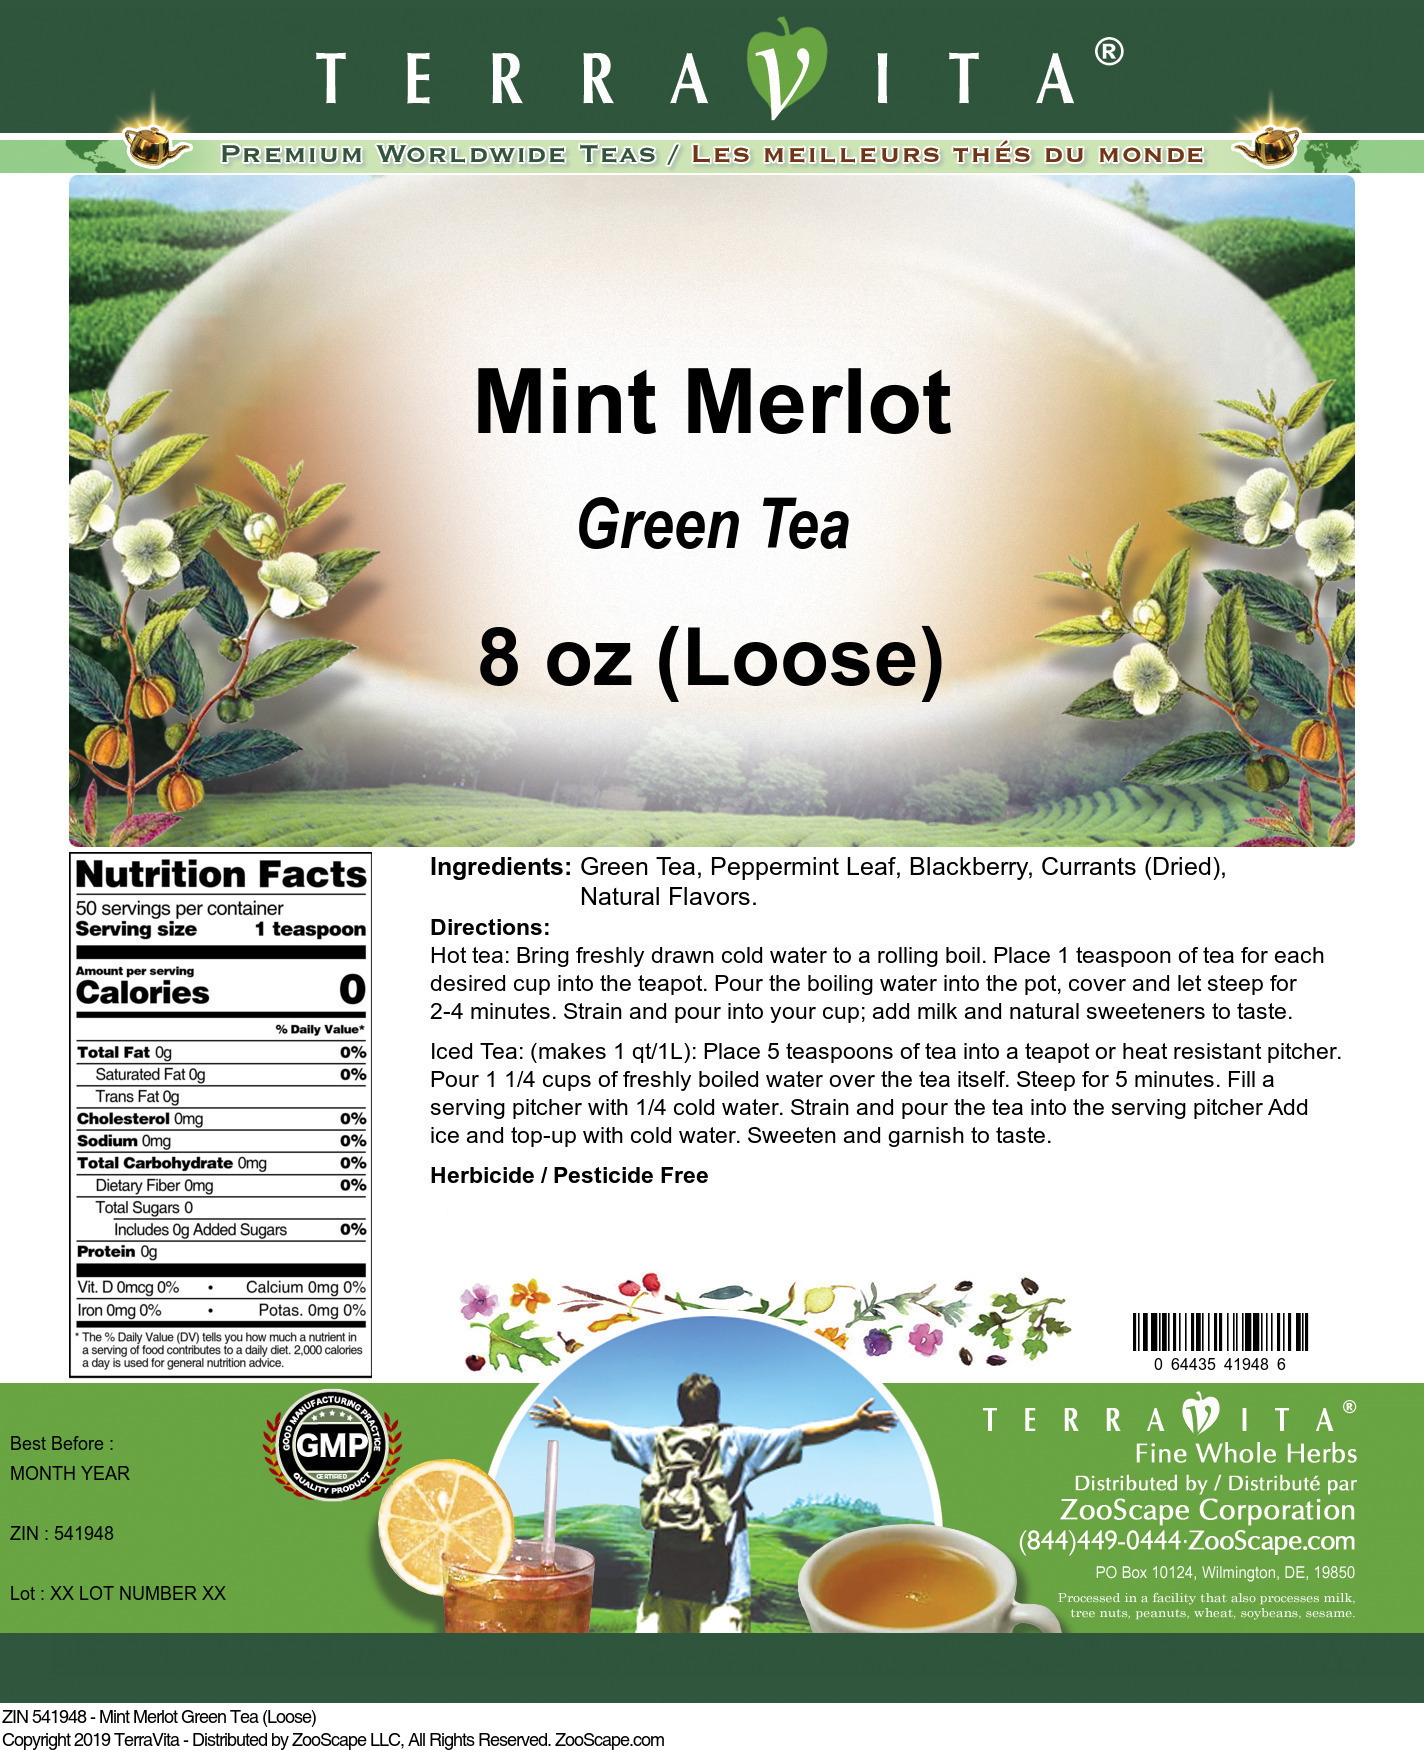 Mint Merlot Green Tea (Loose) - Label